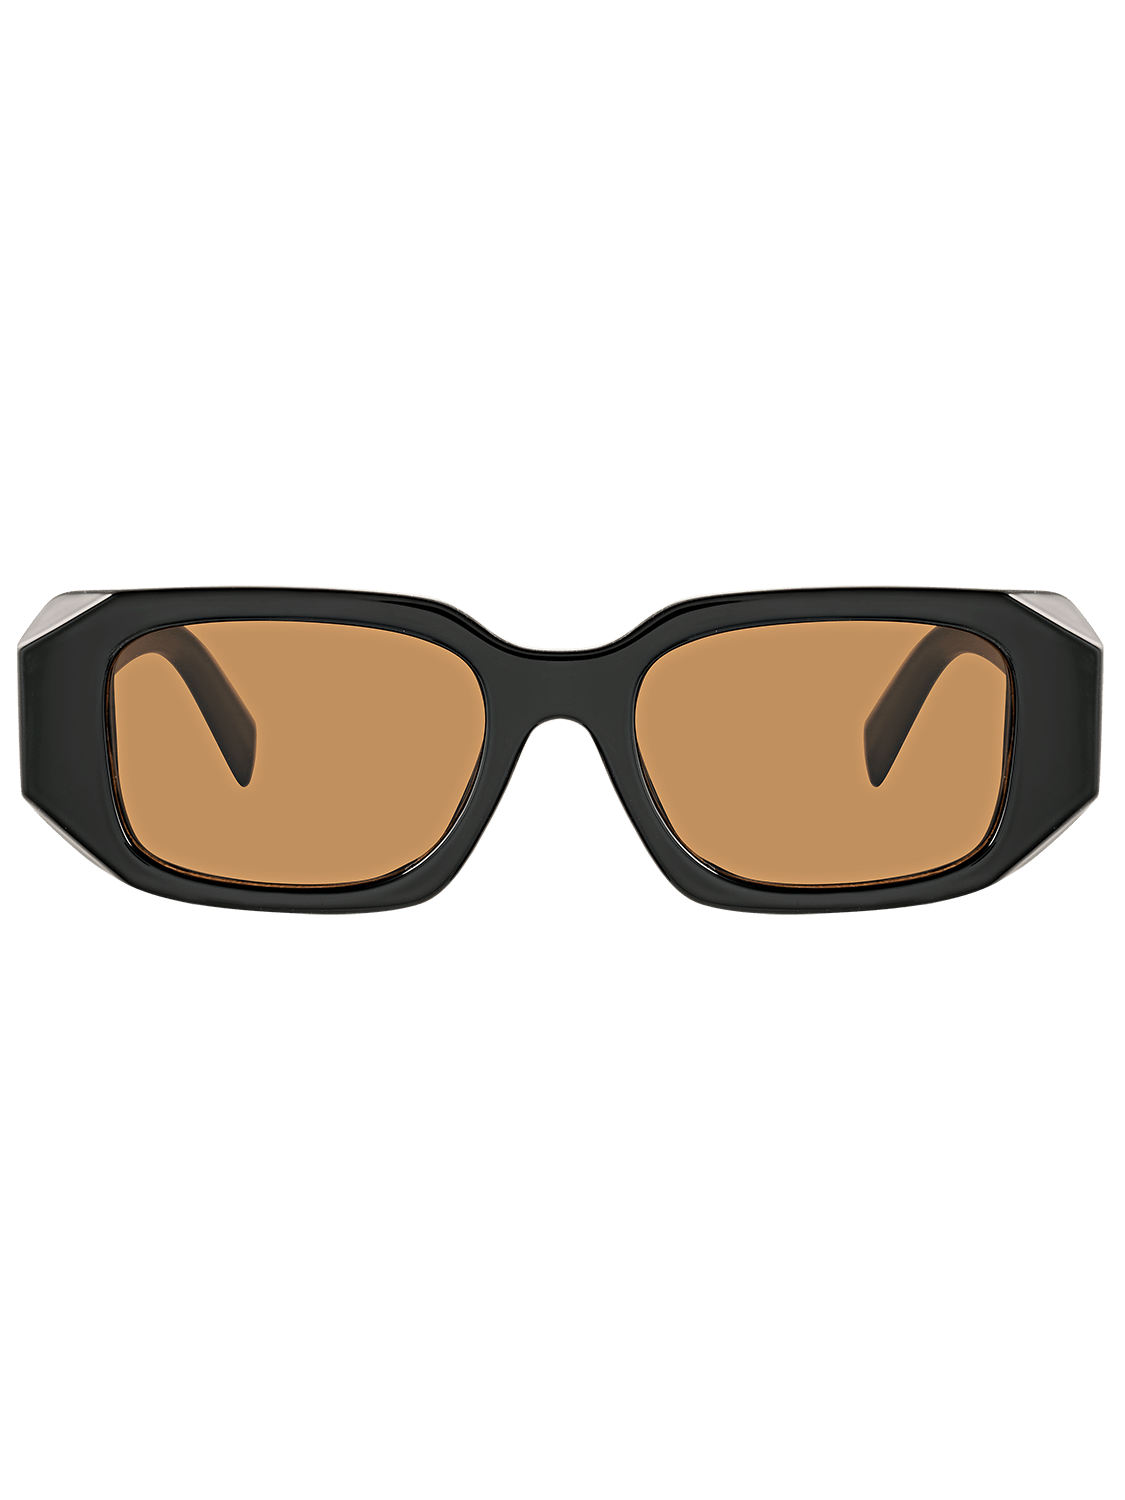 Black Prada style sunglasses